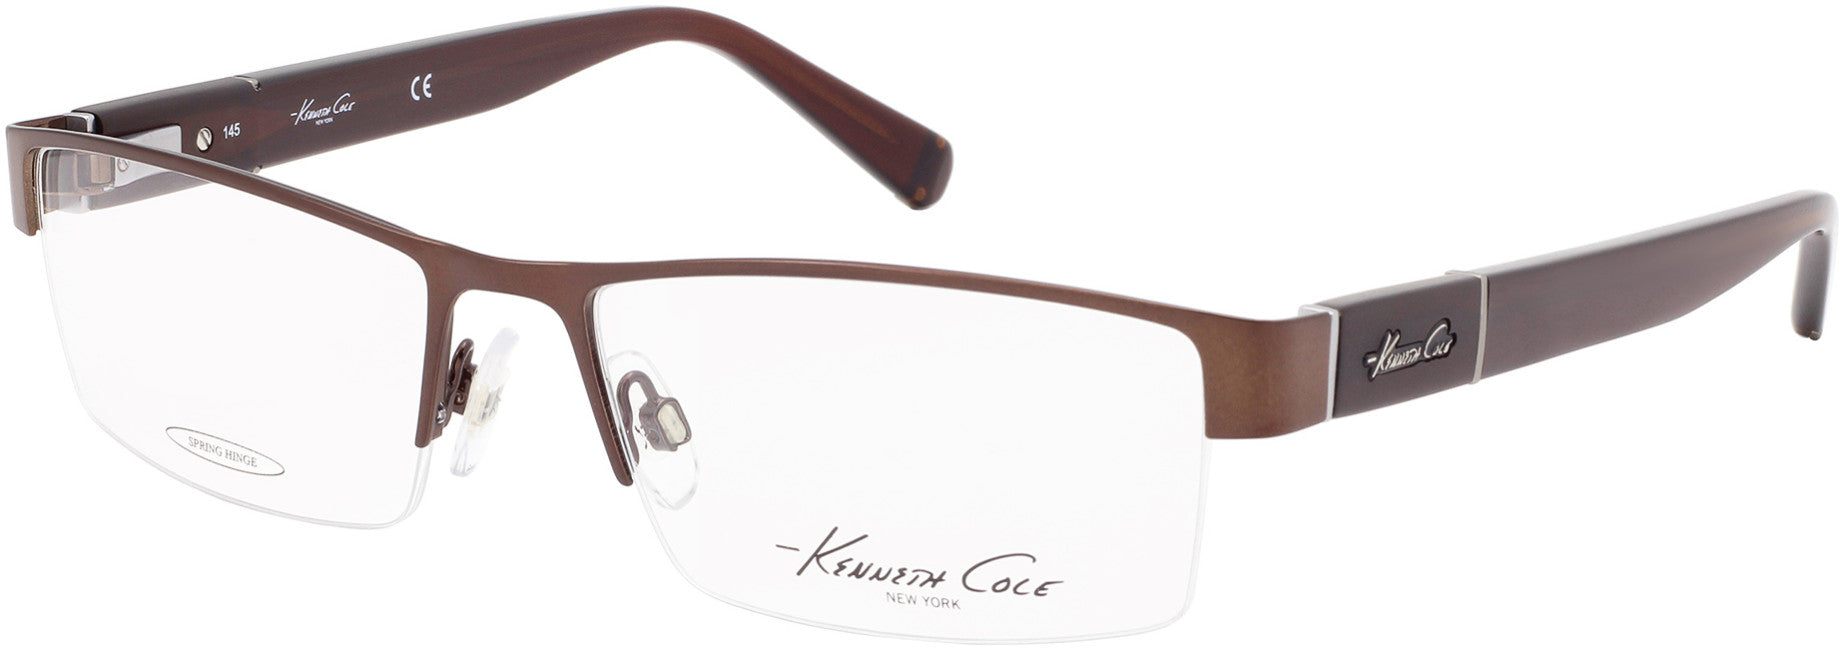 Kenneth Cole New York,Kenneth Cole Reaction KC0217 Eyeglasses 049-049 - Matte Dark Brown